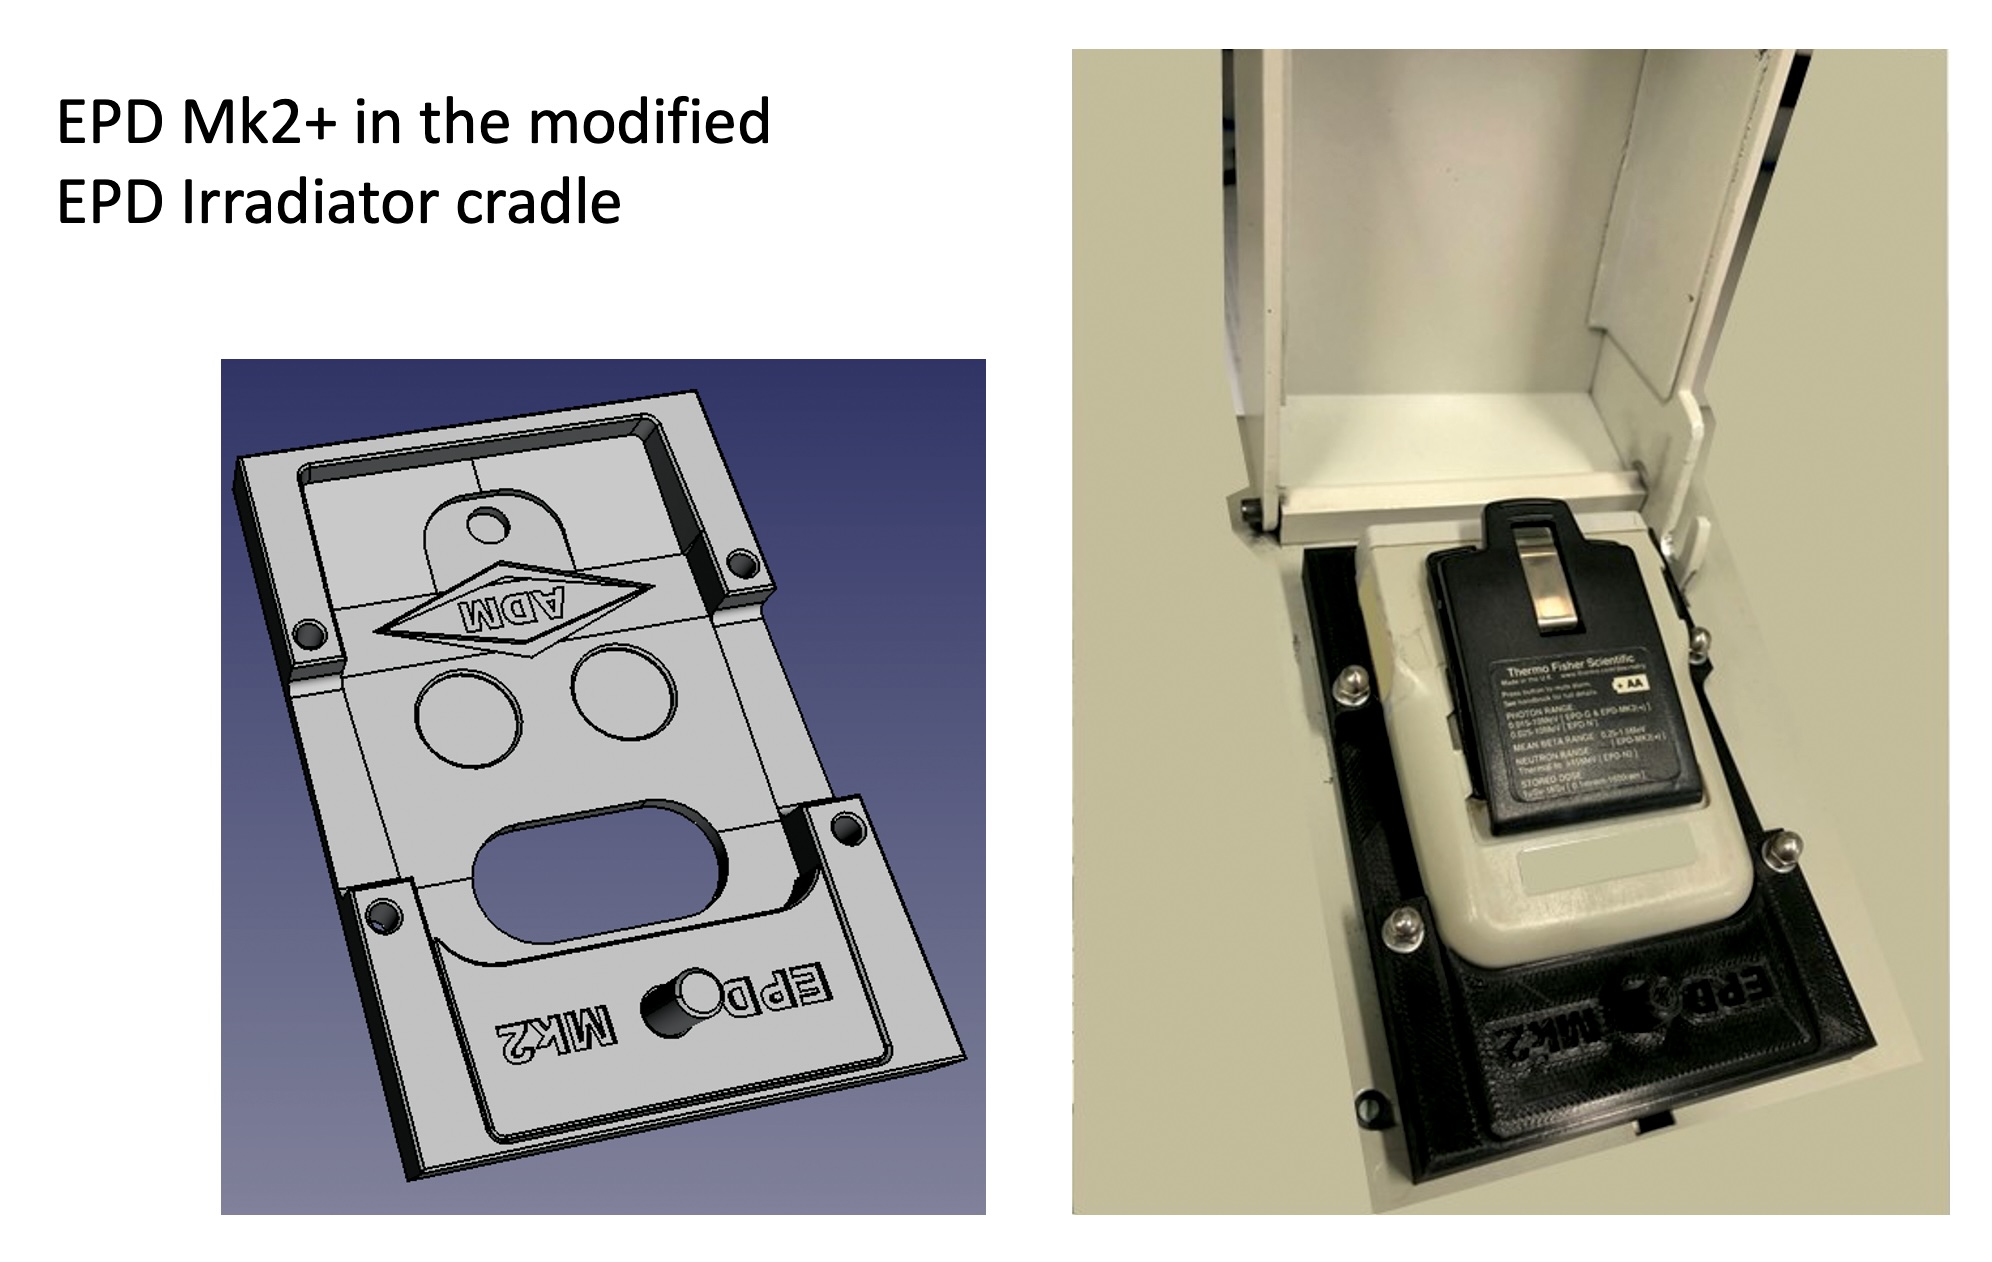 Modified irradiator cradle